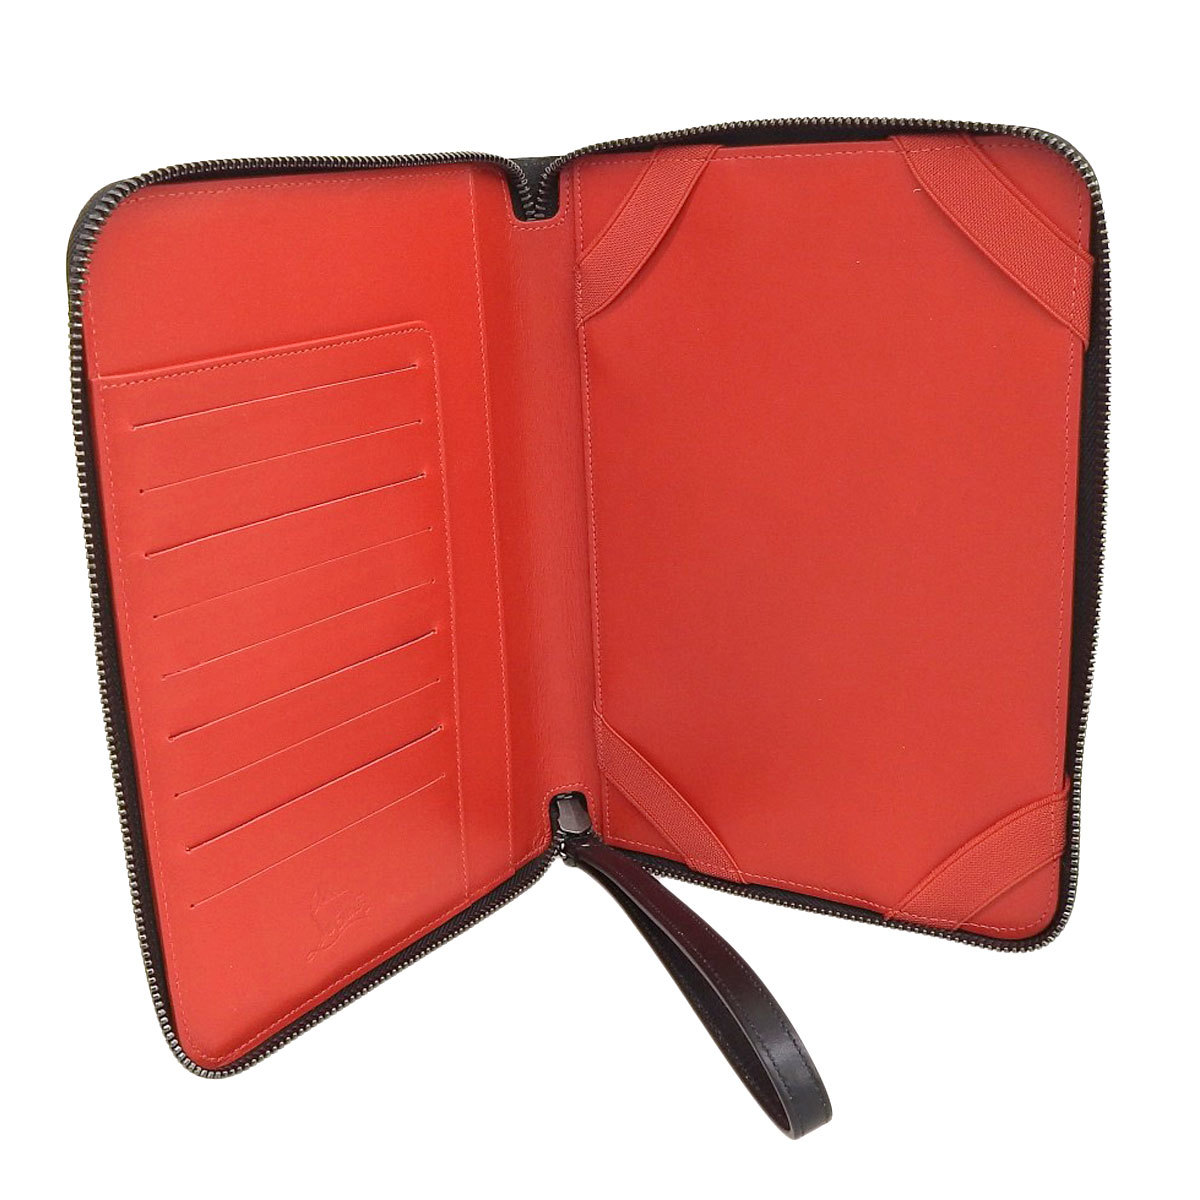  Christian Louboutin Christian Louboutin iPad Mini case studs spike leather black men's lady's 8570